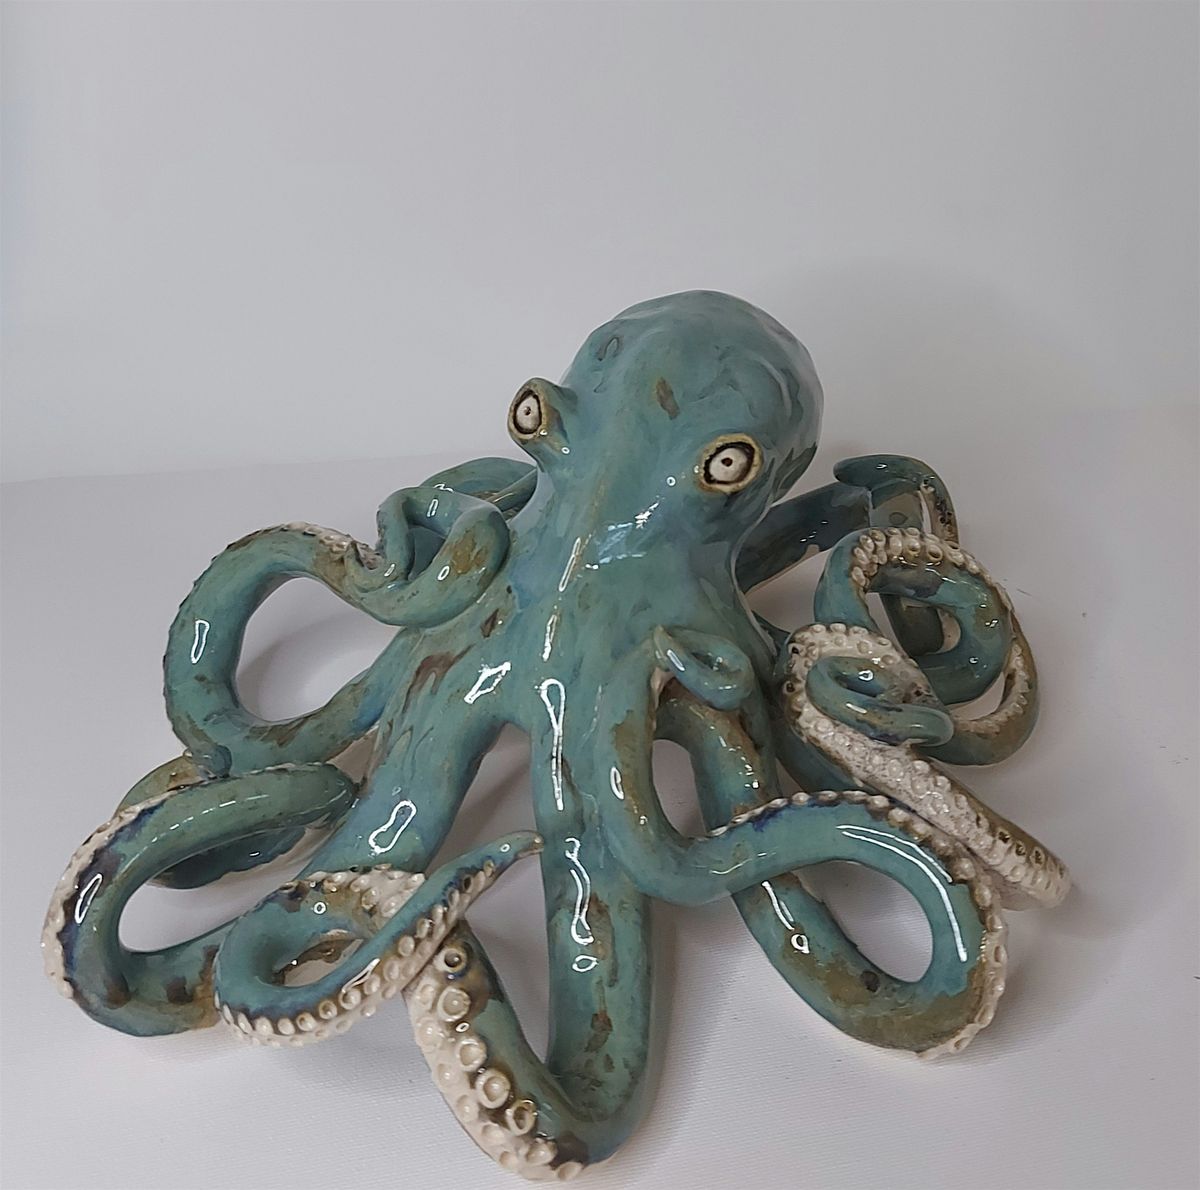 Build A Clay Octopus